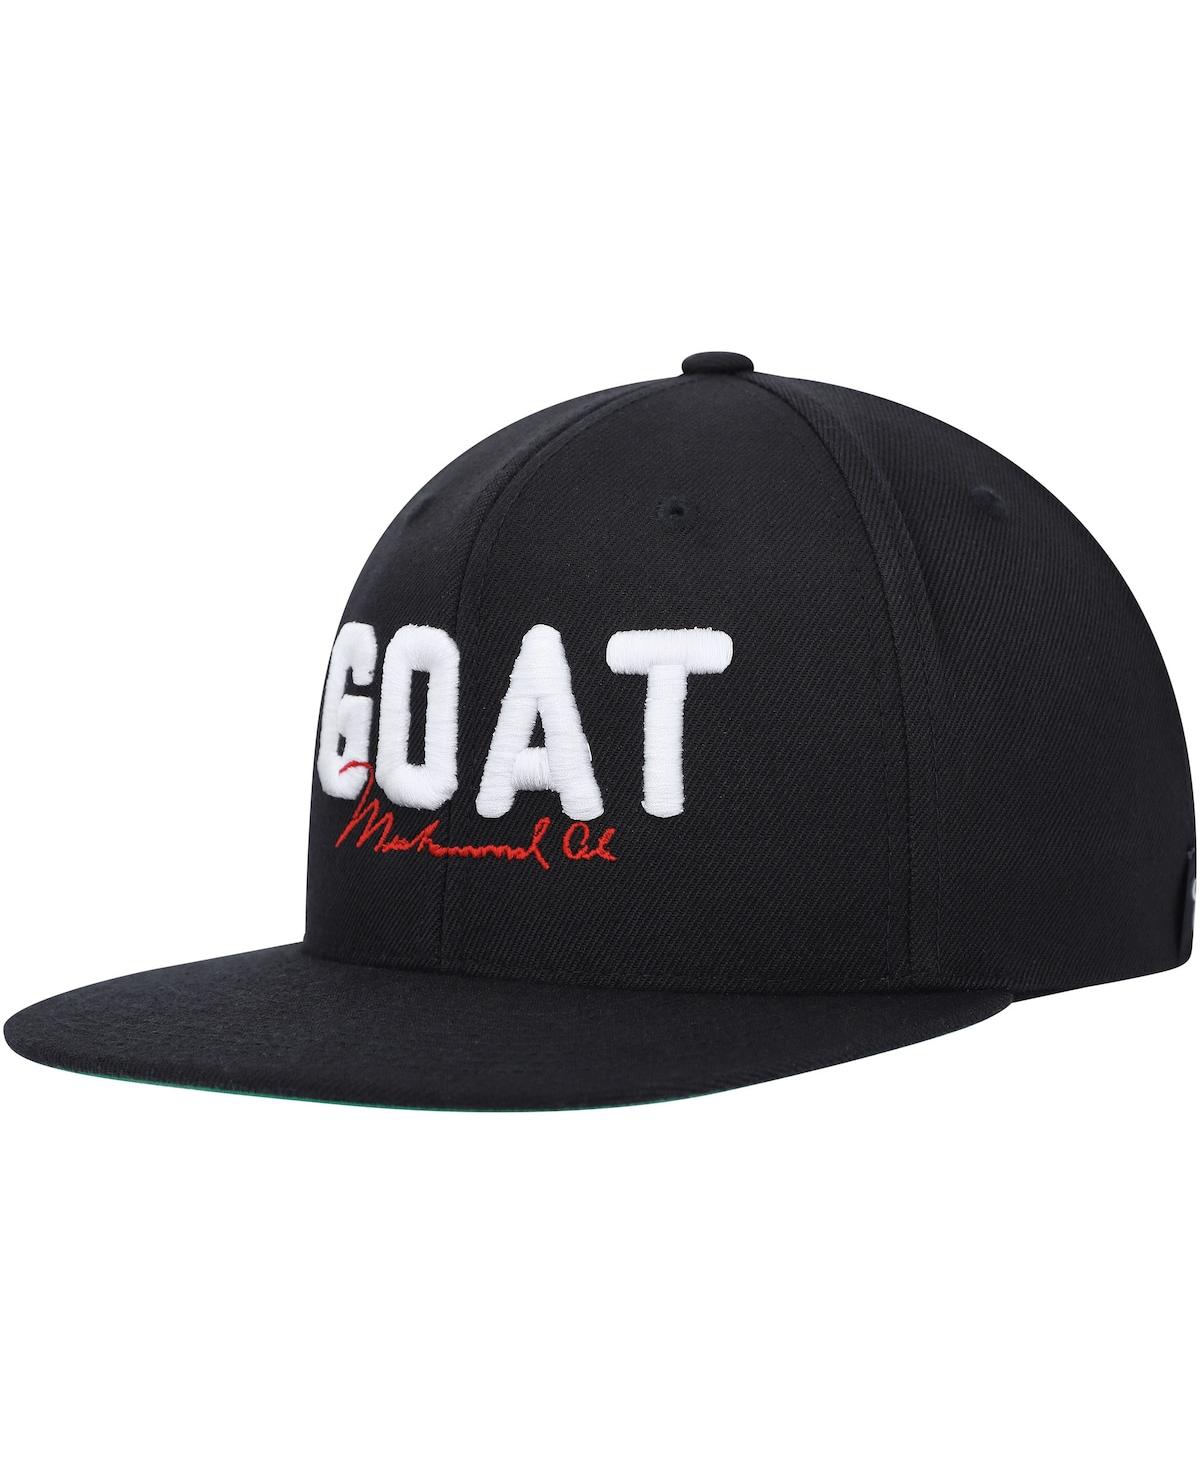 Men's and Women's Contenders Clothing Black Muhammad Ali Goat Snapback Hat - Black